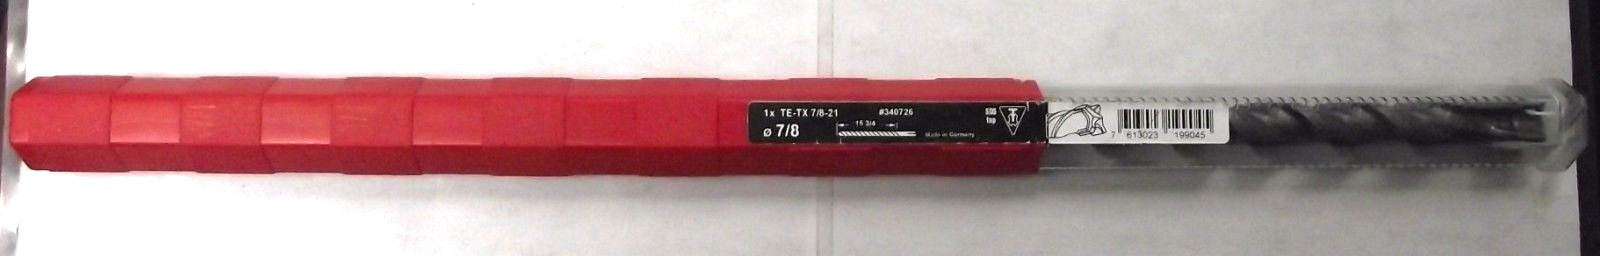 Hilti 340726 13/16" x 21" SDS 4 Cutter Hammer Drill Bit Germany